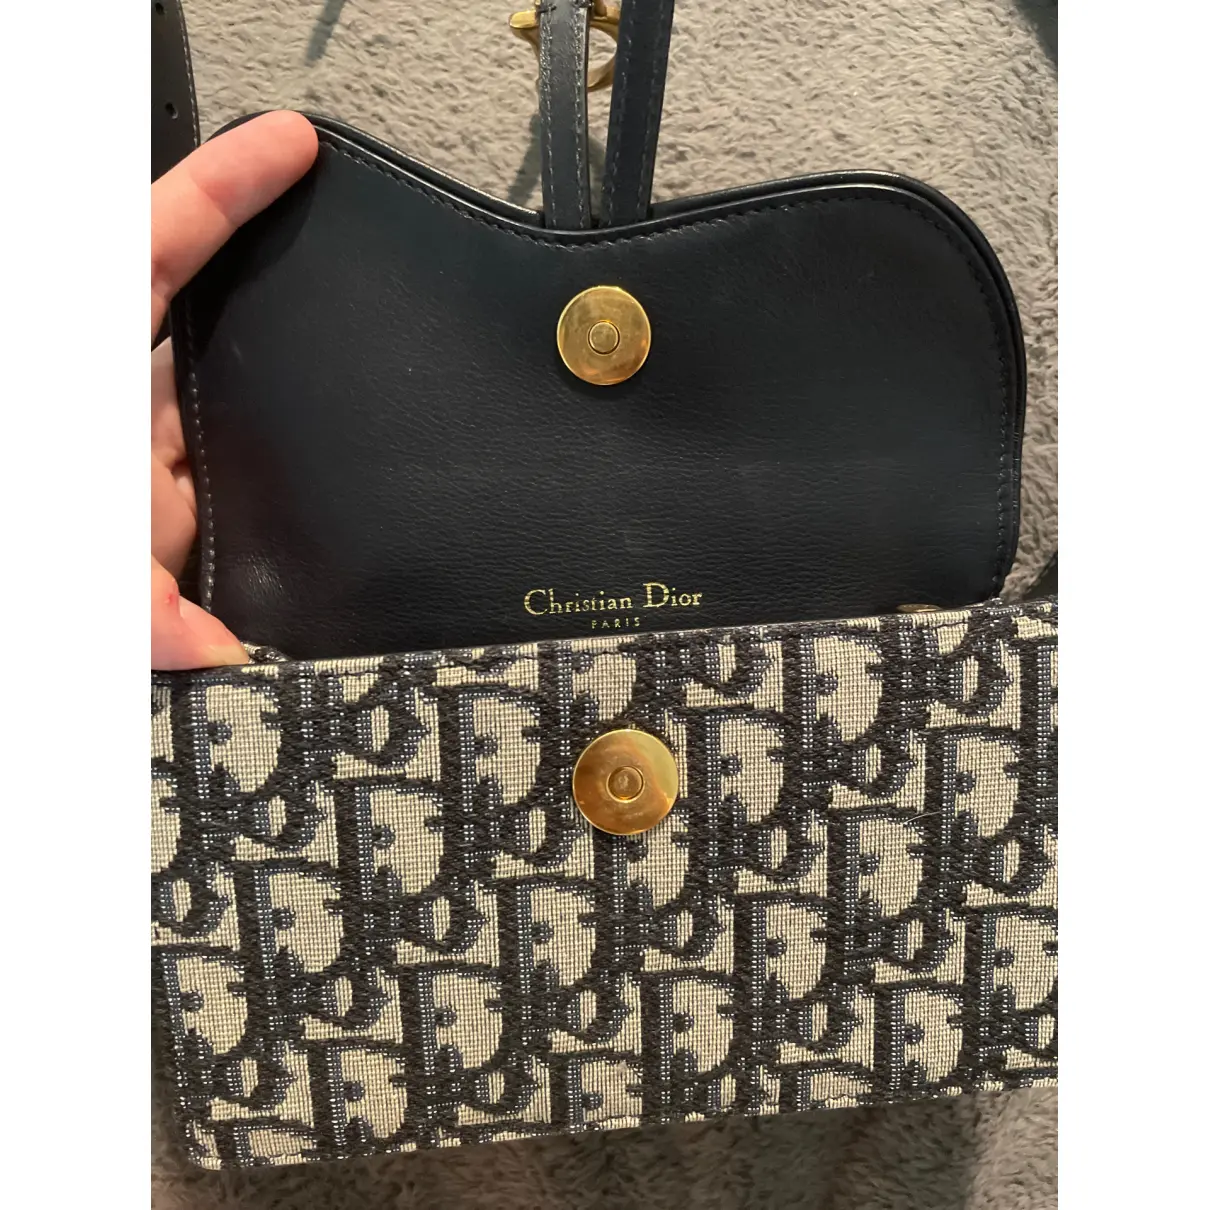 Buy Dior Saddle cloth handbag online